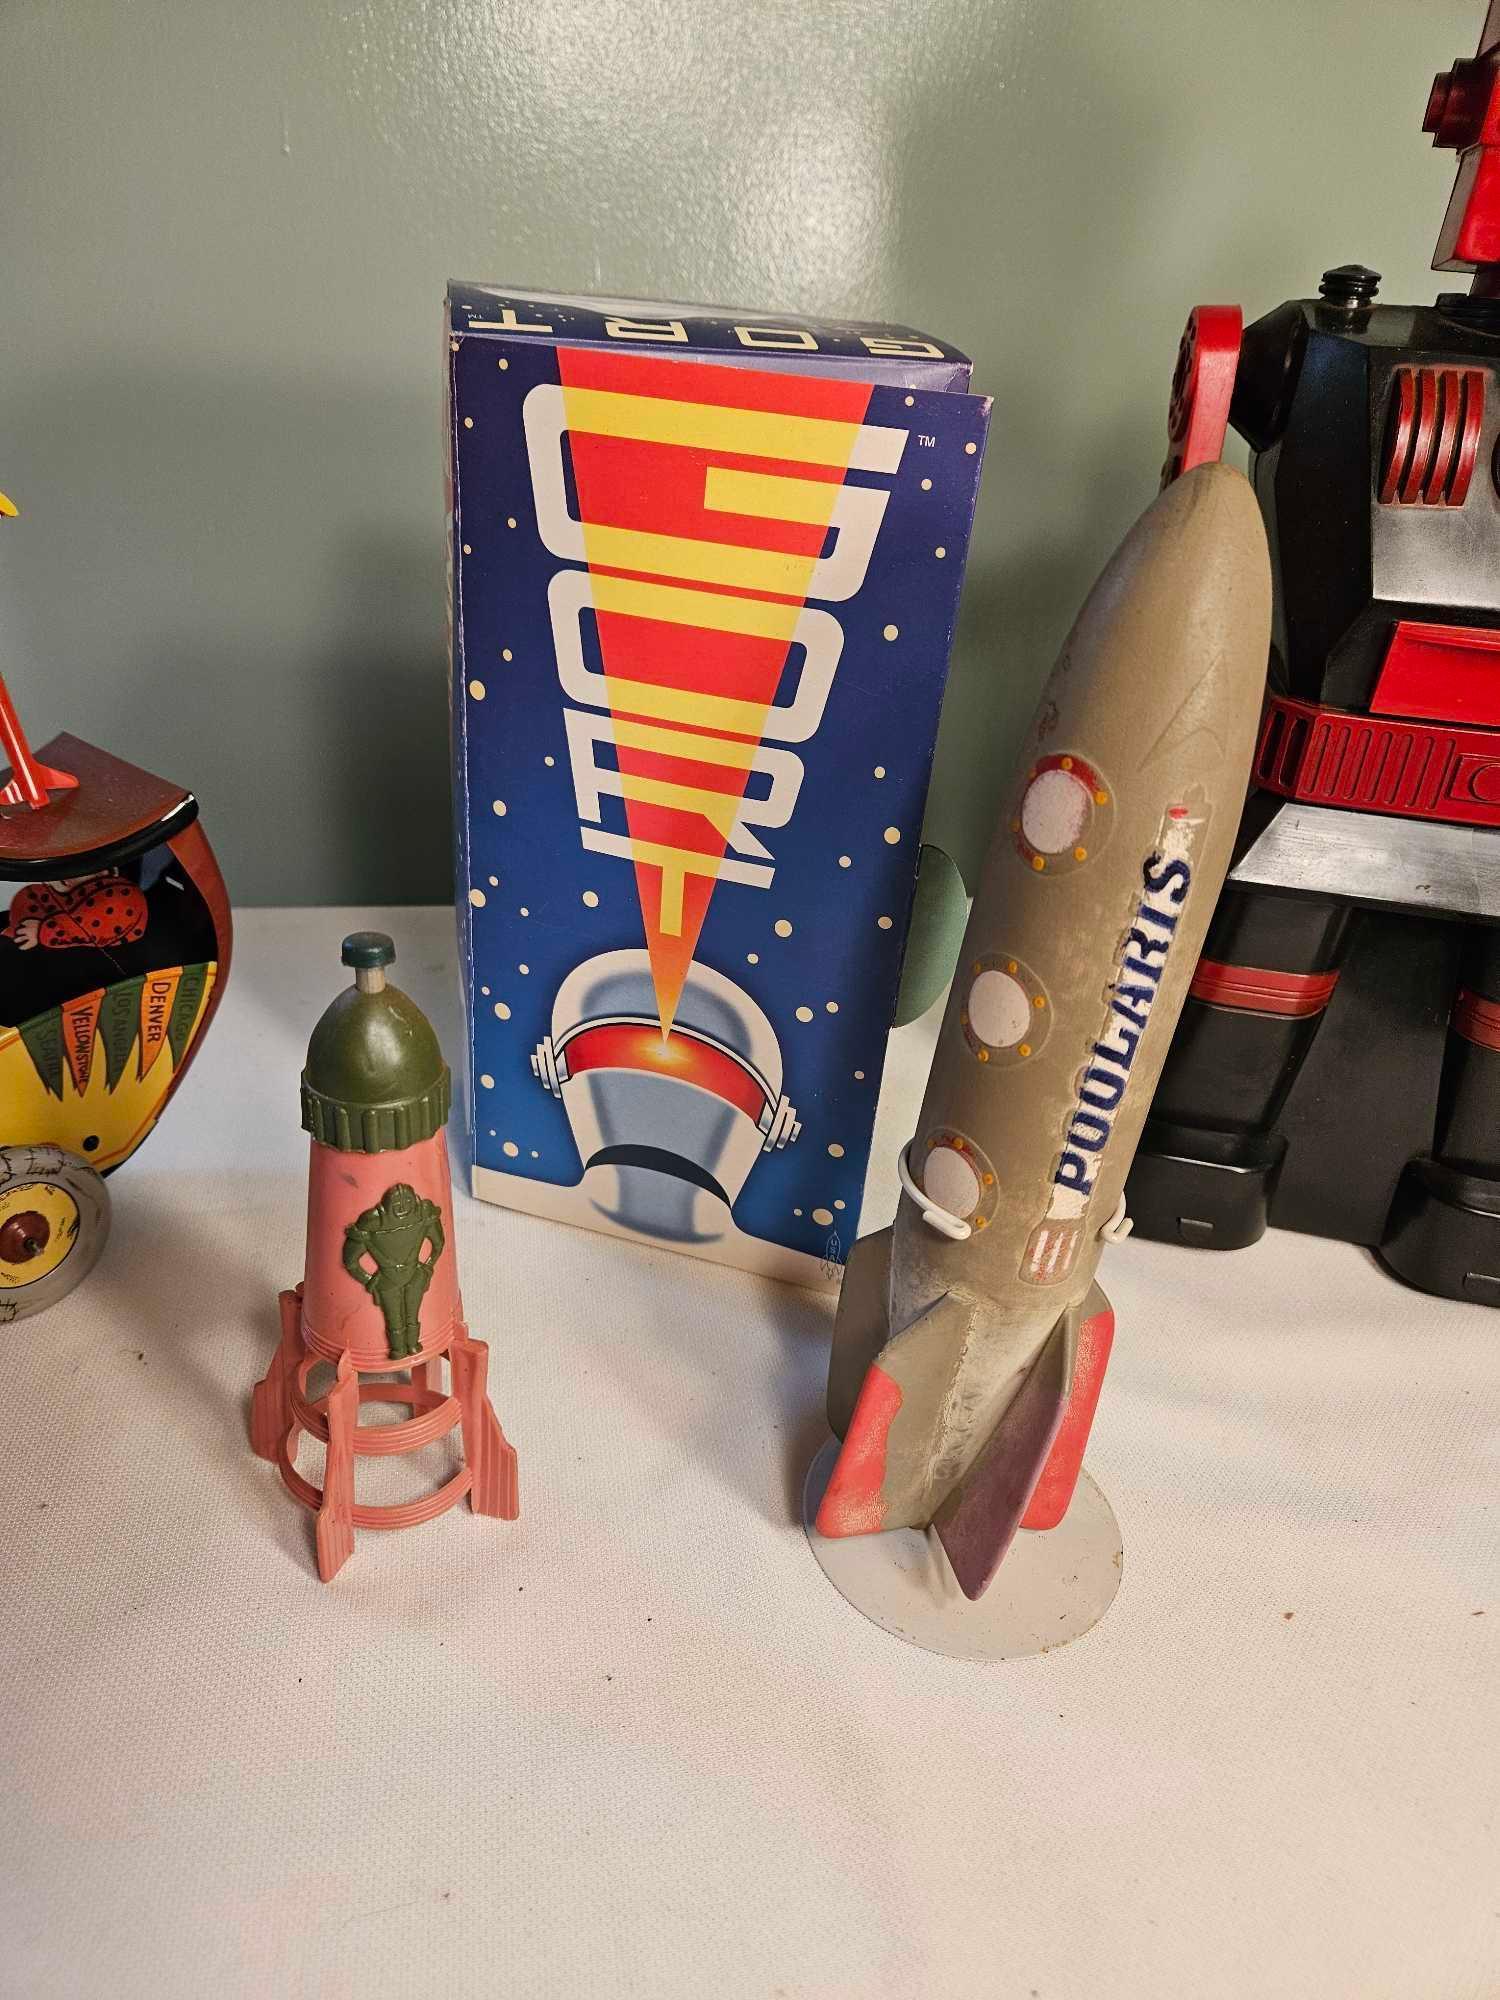 Assortment of Space Items - Robots, Rockets